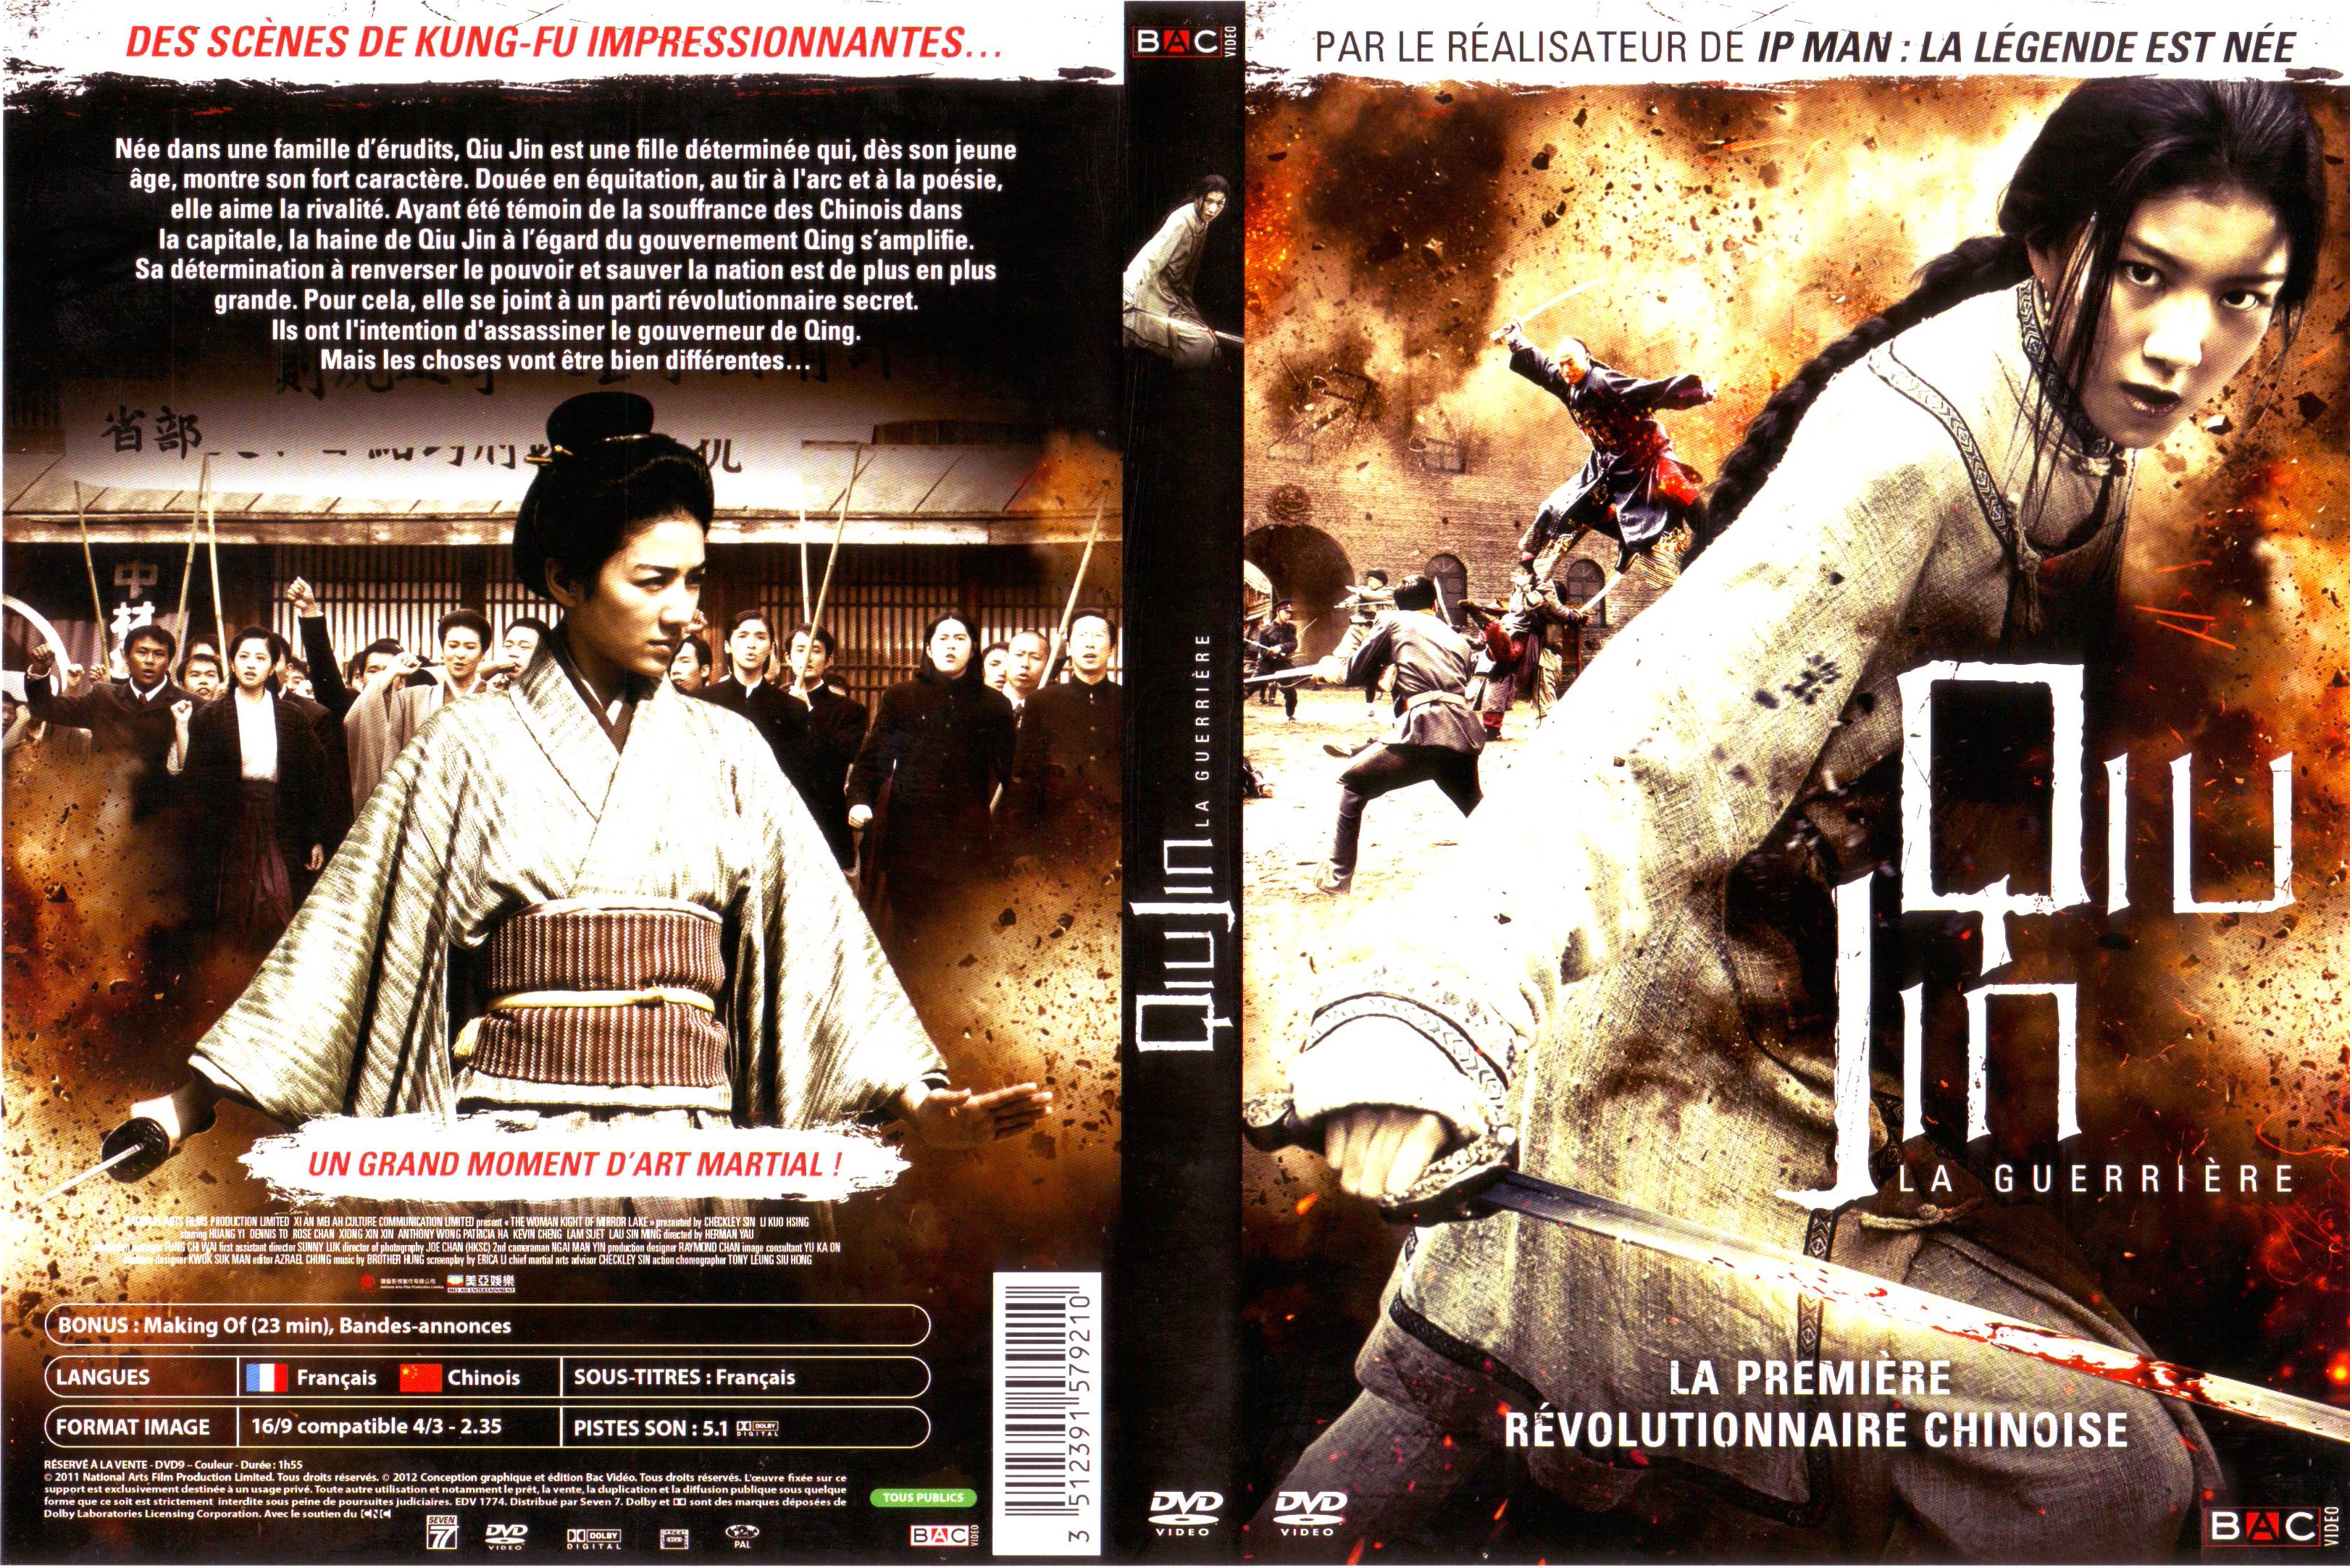 Jaquette DVD Qiu Jin, la guerrire